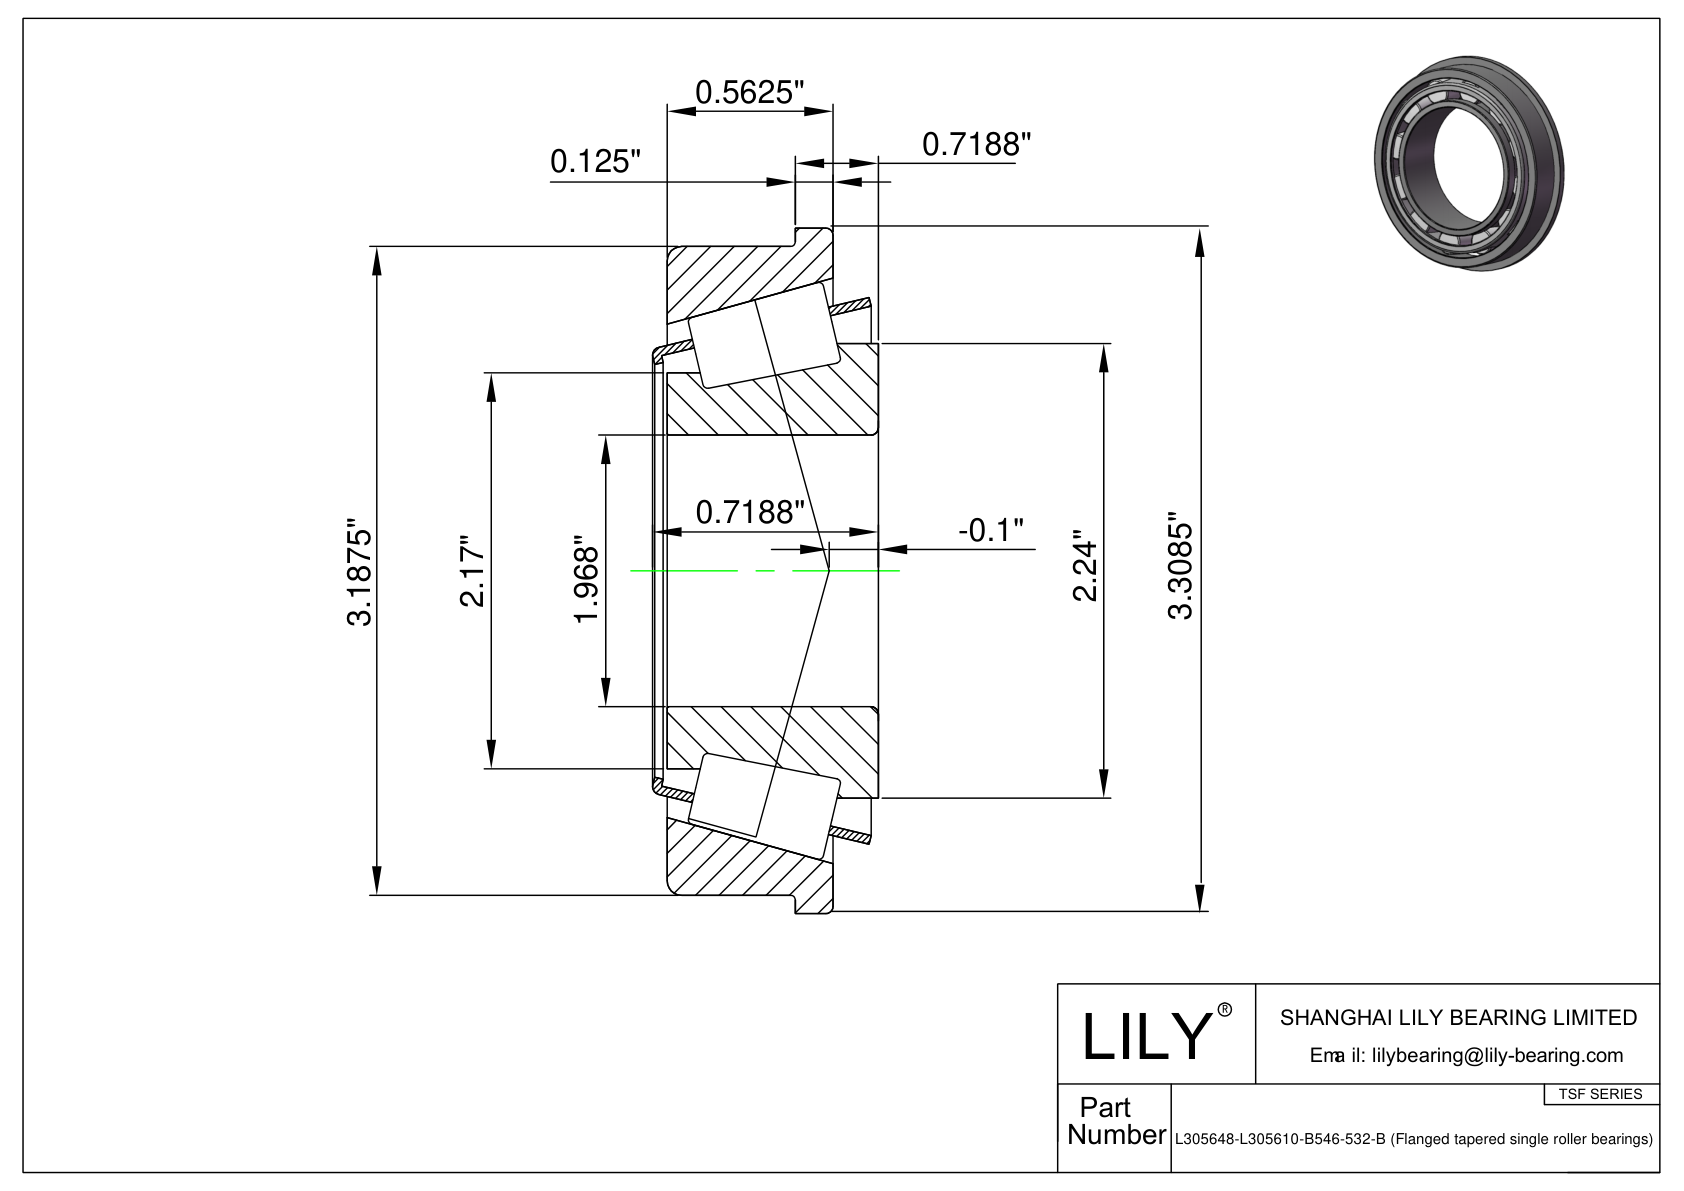 L305648-L305610-B TSF系列(带法兰的圆锥单滚子轴承)(英制) CAD图形